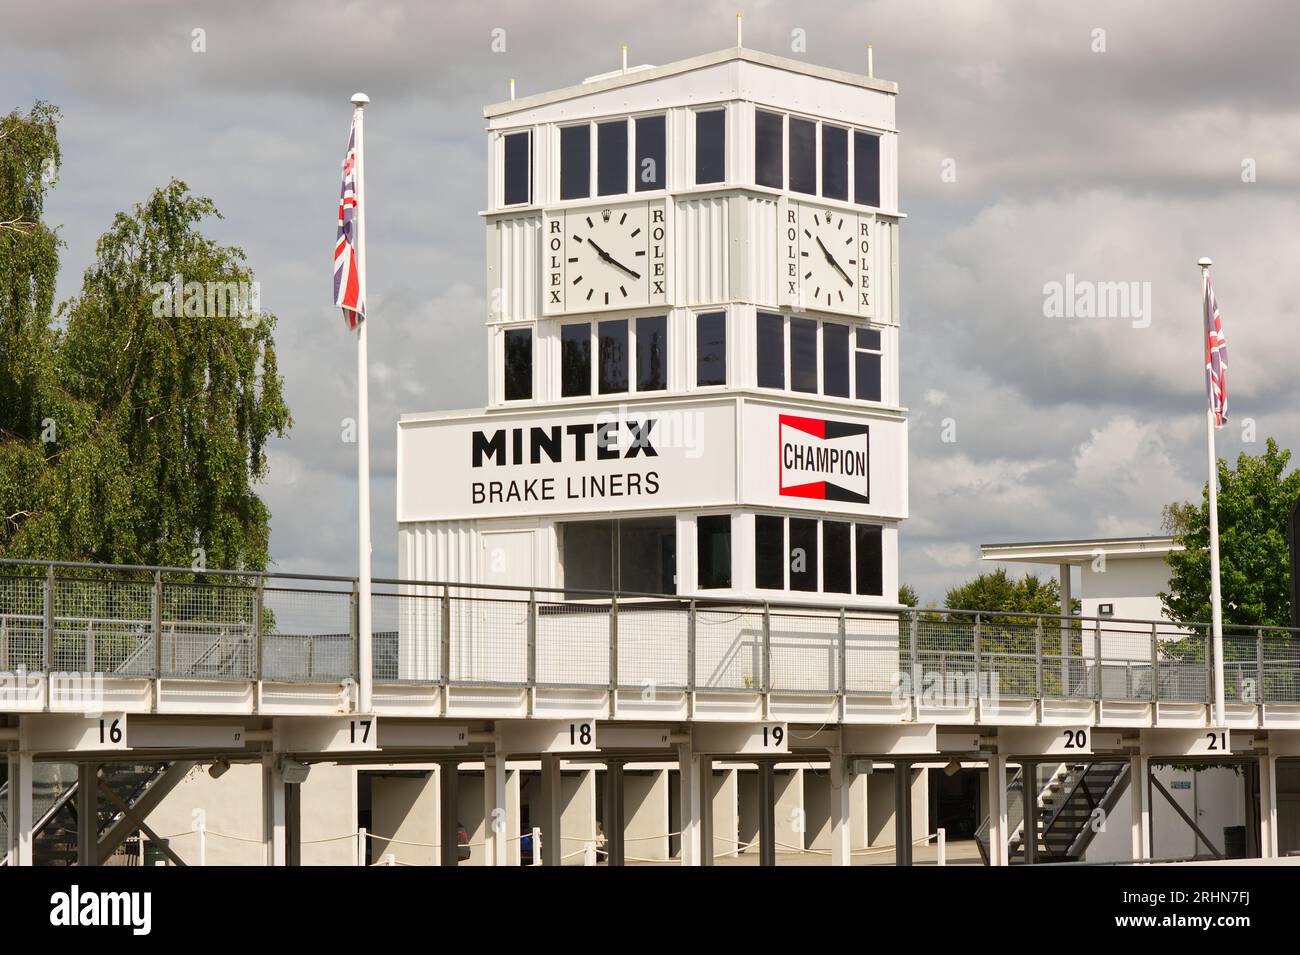 Kontrollgebäude am Goodwod Motor Racing Circuit in West Sussex, England. Stockfoto